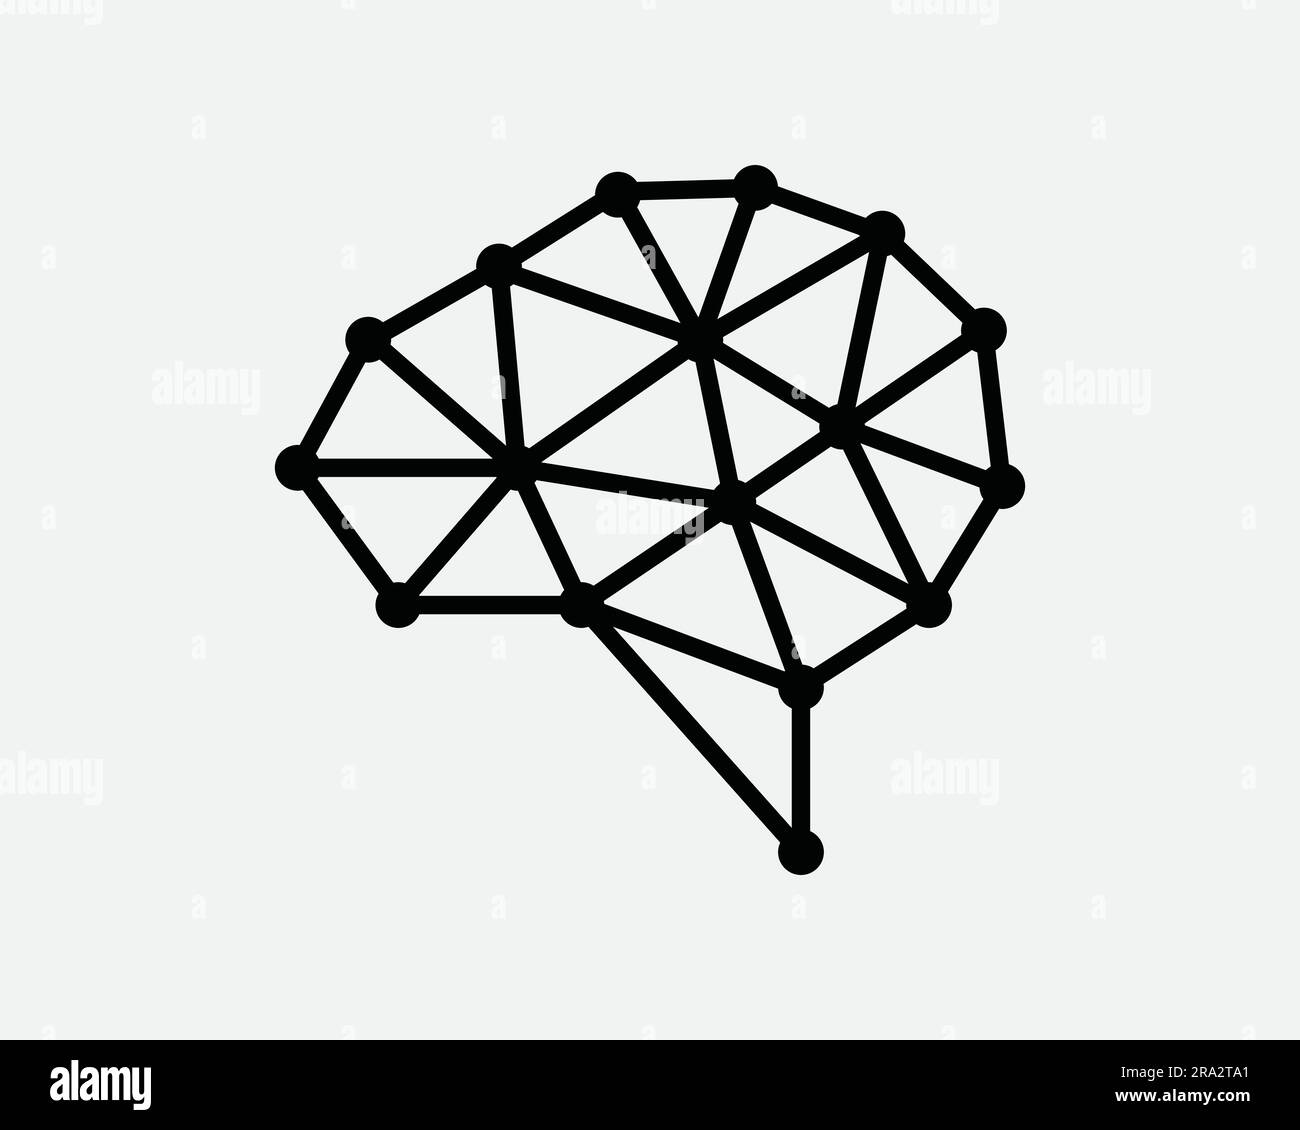 Brain Network Icon. IQ AI Human Artificial Intelligent Intelligence Digital Web Connection Black White Graphic Clipart Artwork Symbol Sign Vector EPS Stock Vector